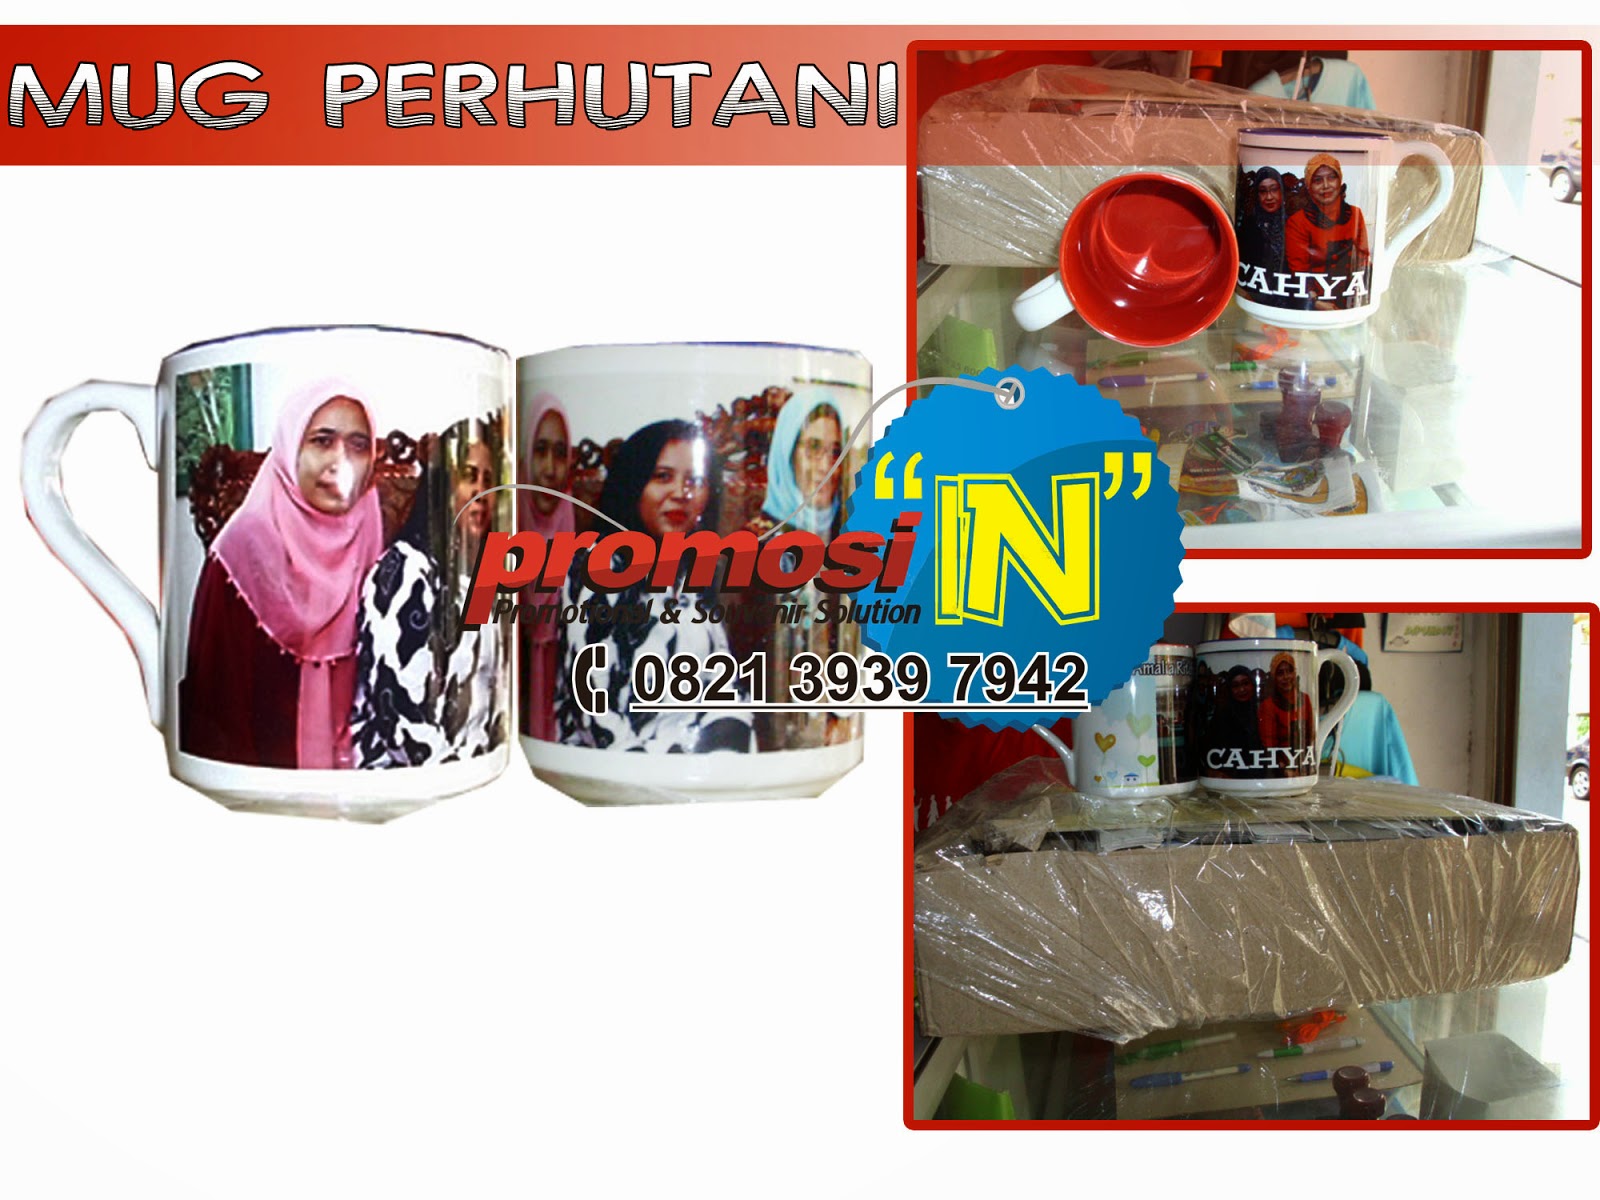 Mug,Agen Mug Murah,Agen Mug Foto,Agen Mug di Surabaya,Agen Mug Cantik,Agen Mug Souvenir